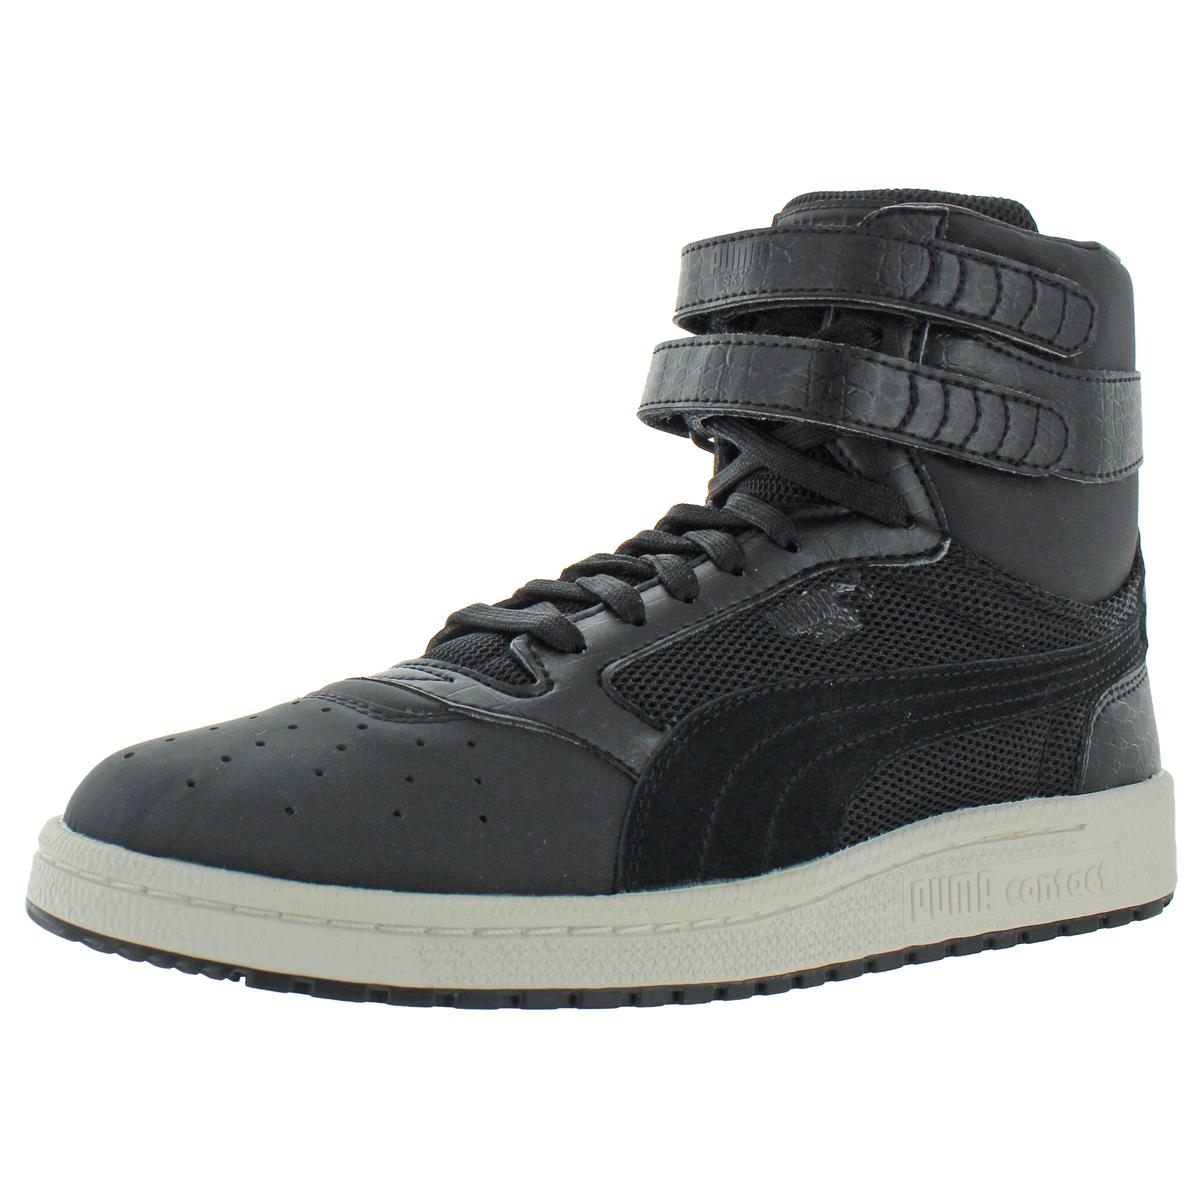 Puma Boys Sky II Hi Black Basketball Shoes Sneakers 6.5 Narrow (C) BHFO ...